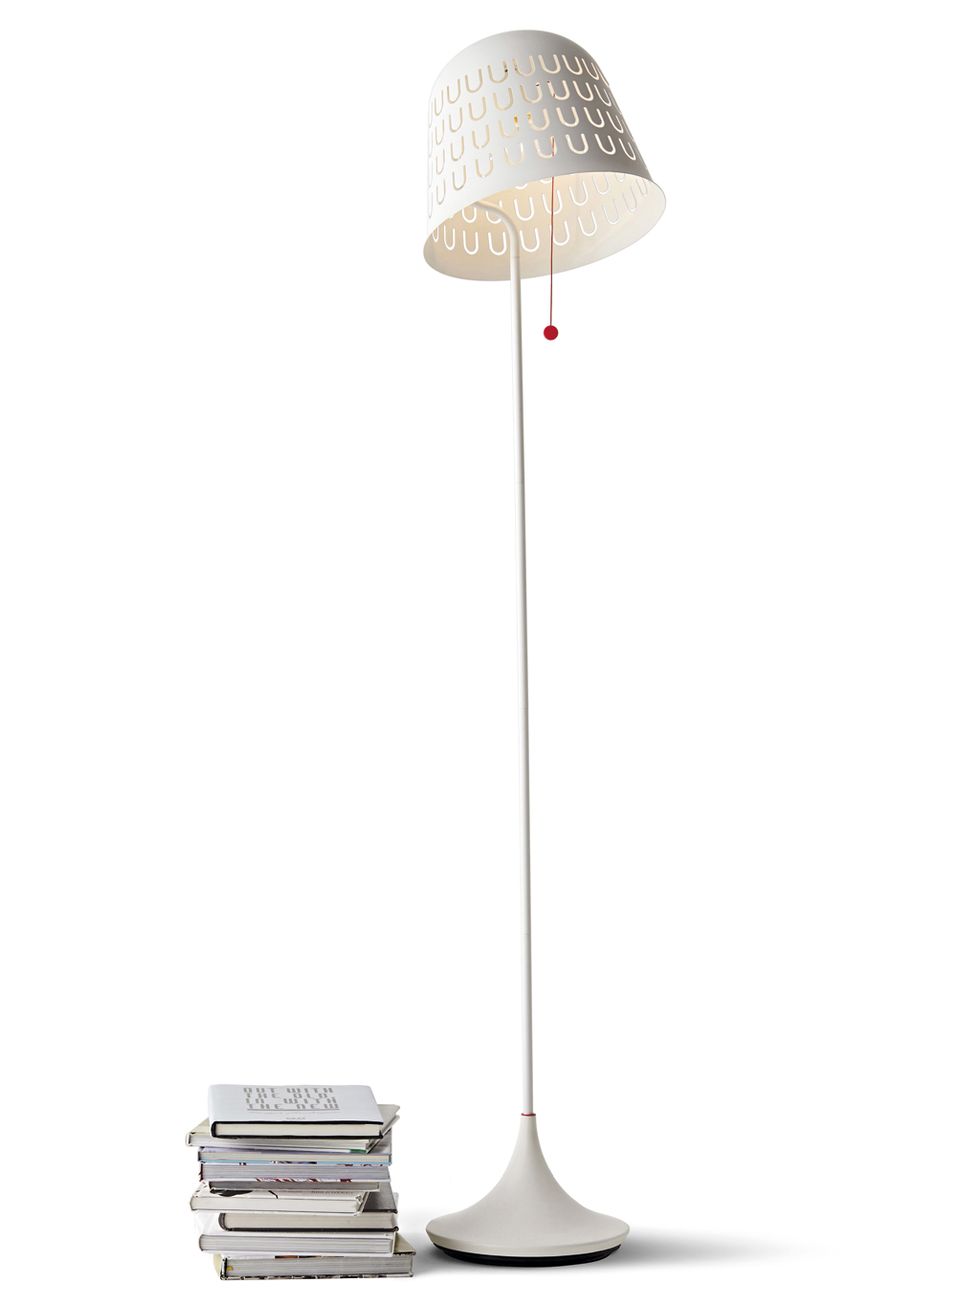 Lamp, Light fixture, Lampshade, Lighting, Lighting accessory, Light, Floor, Table, Beige, Interior design, 